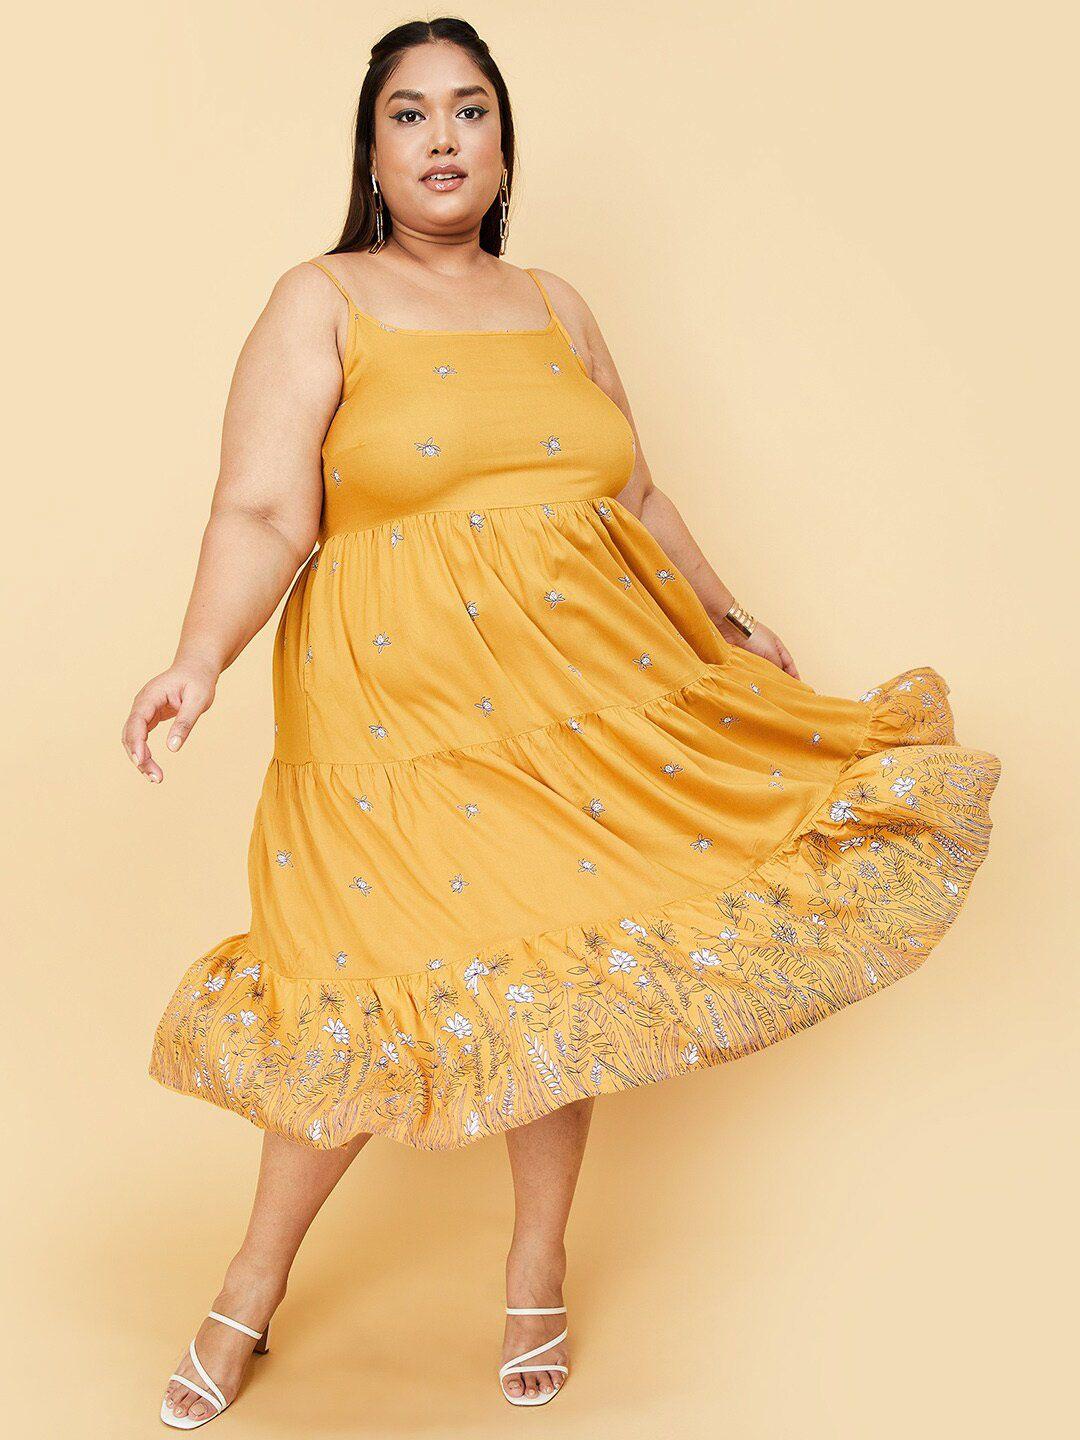 max-mustard-yellow-floral-ethnic-a-line-midi-dress